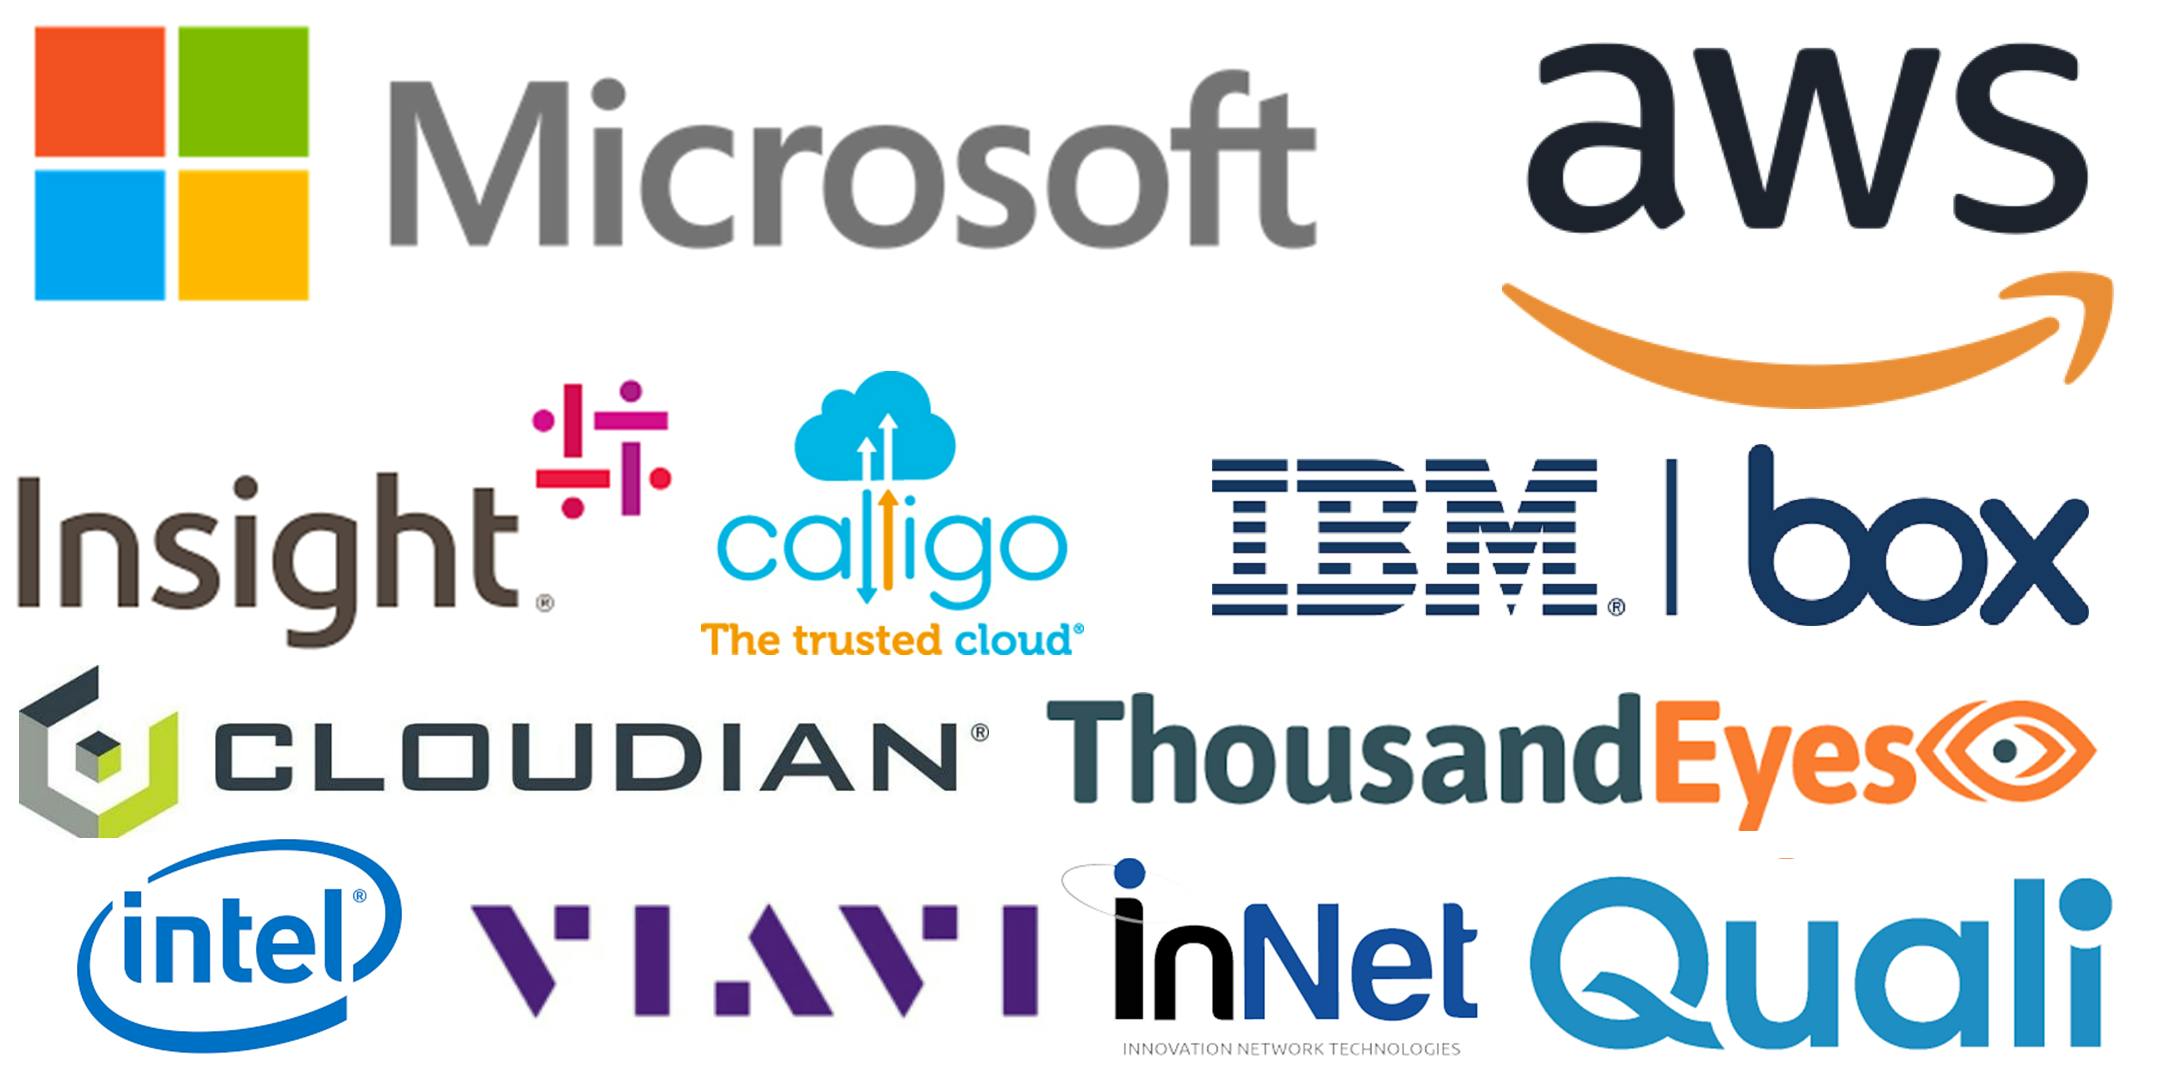 Cloud, Security, Storage, DevOps, AI, IoT, GDPR, Blockchain Austin